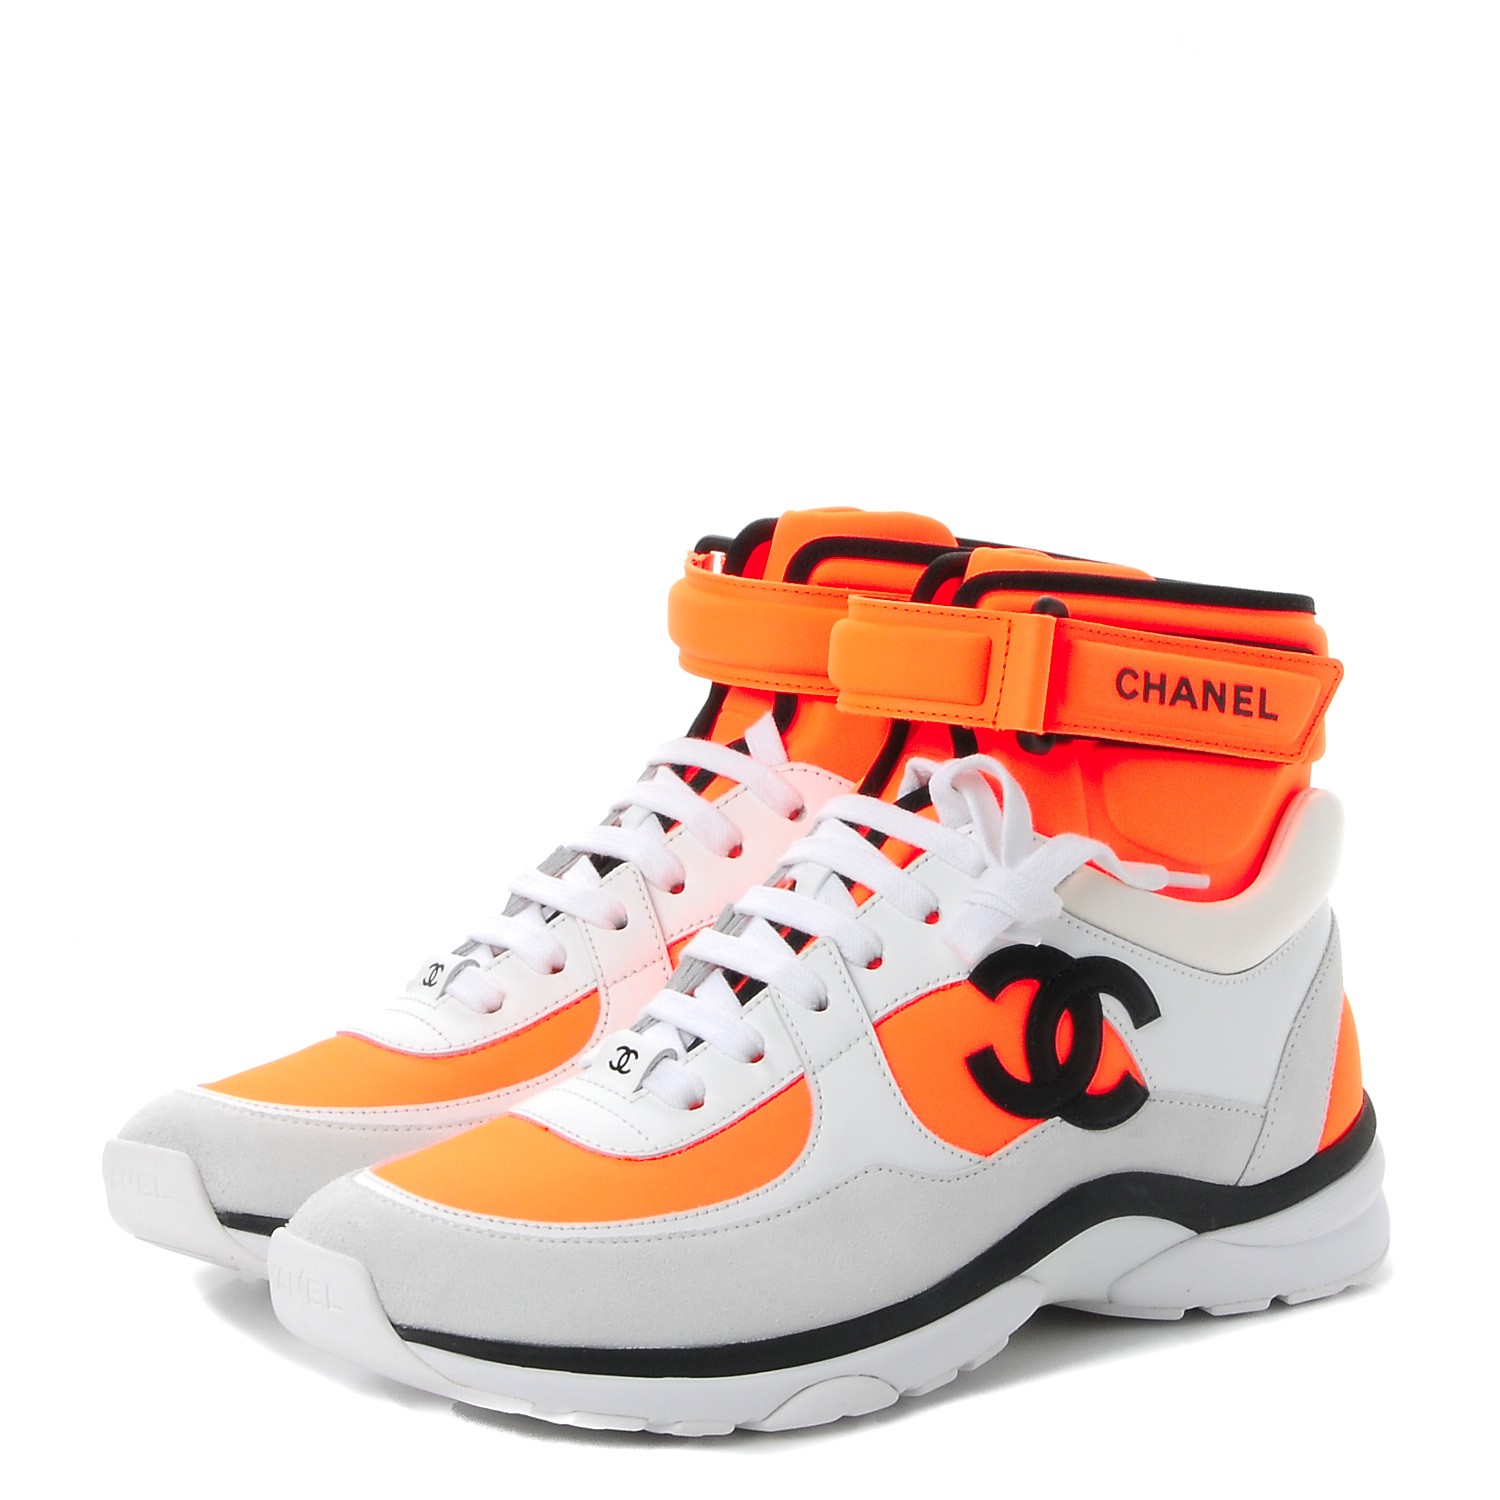 chanel sneakers orange white